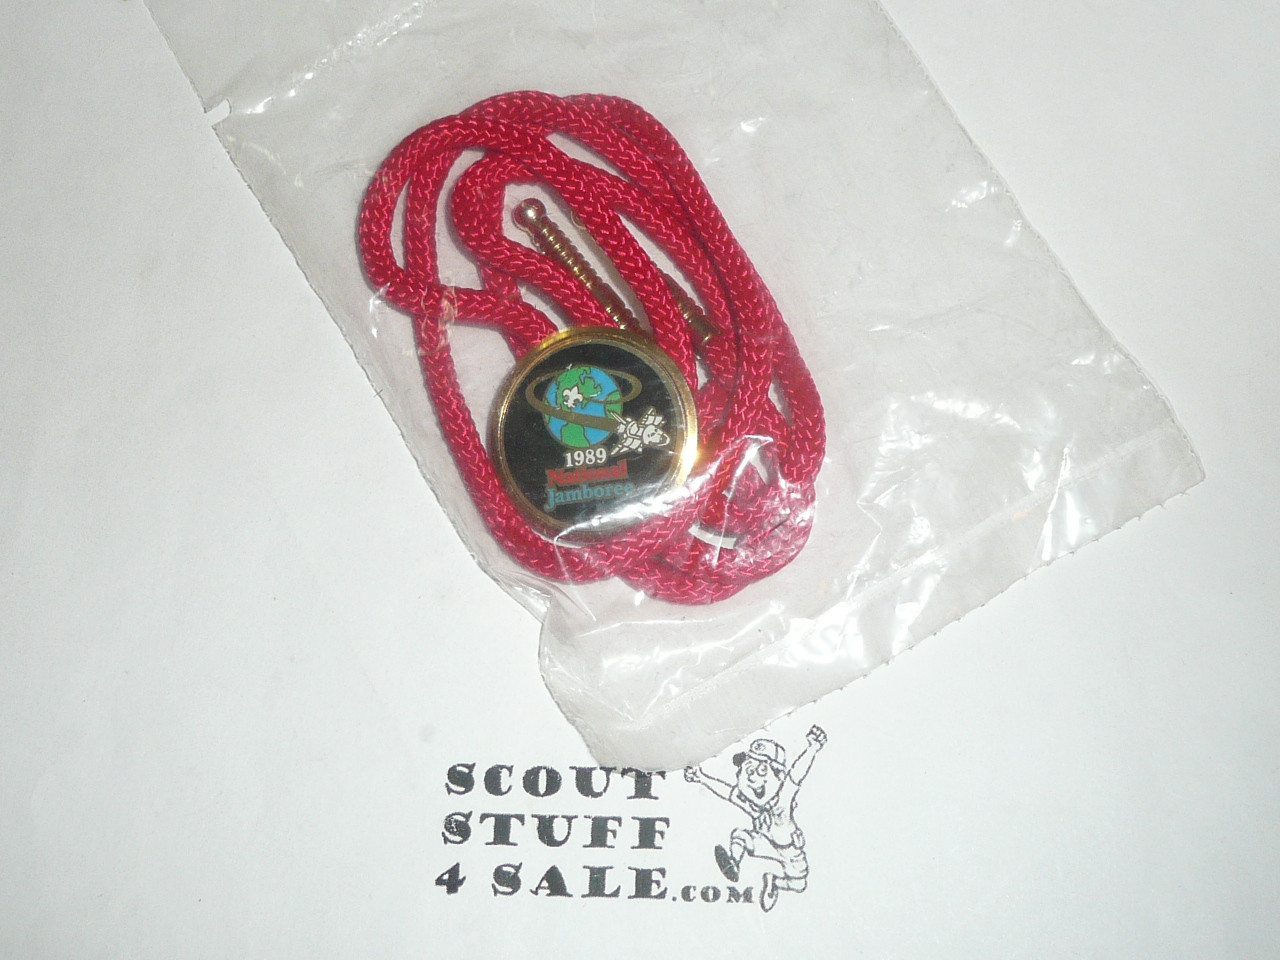 1989 National Jamboree Bolo Tie, red cord